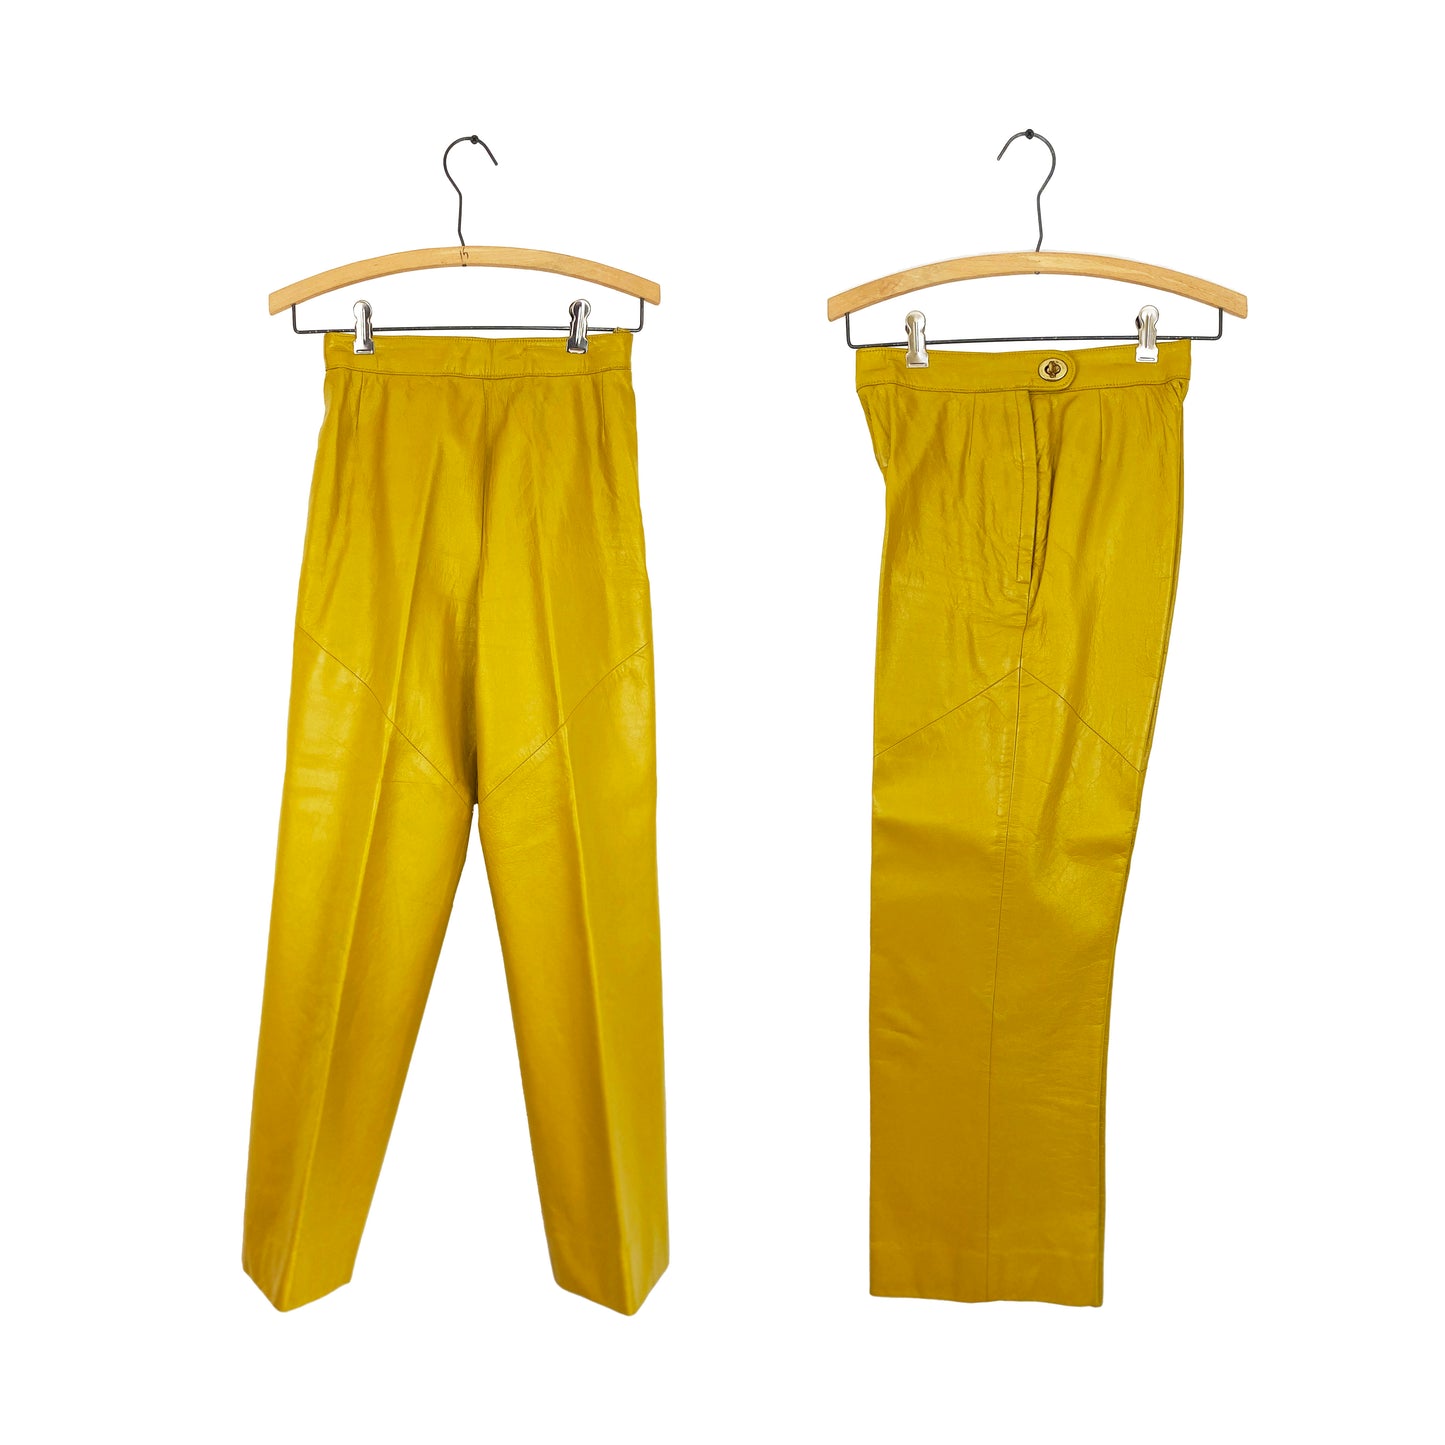 1960-1970s Bonnie Cashin Sills Mustard Yellow Leather Straight Leg Pants with Side Turn Lock Closure / Size XS/S